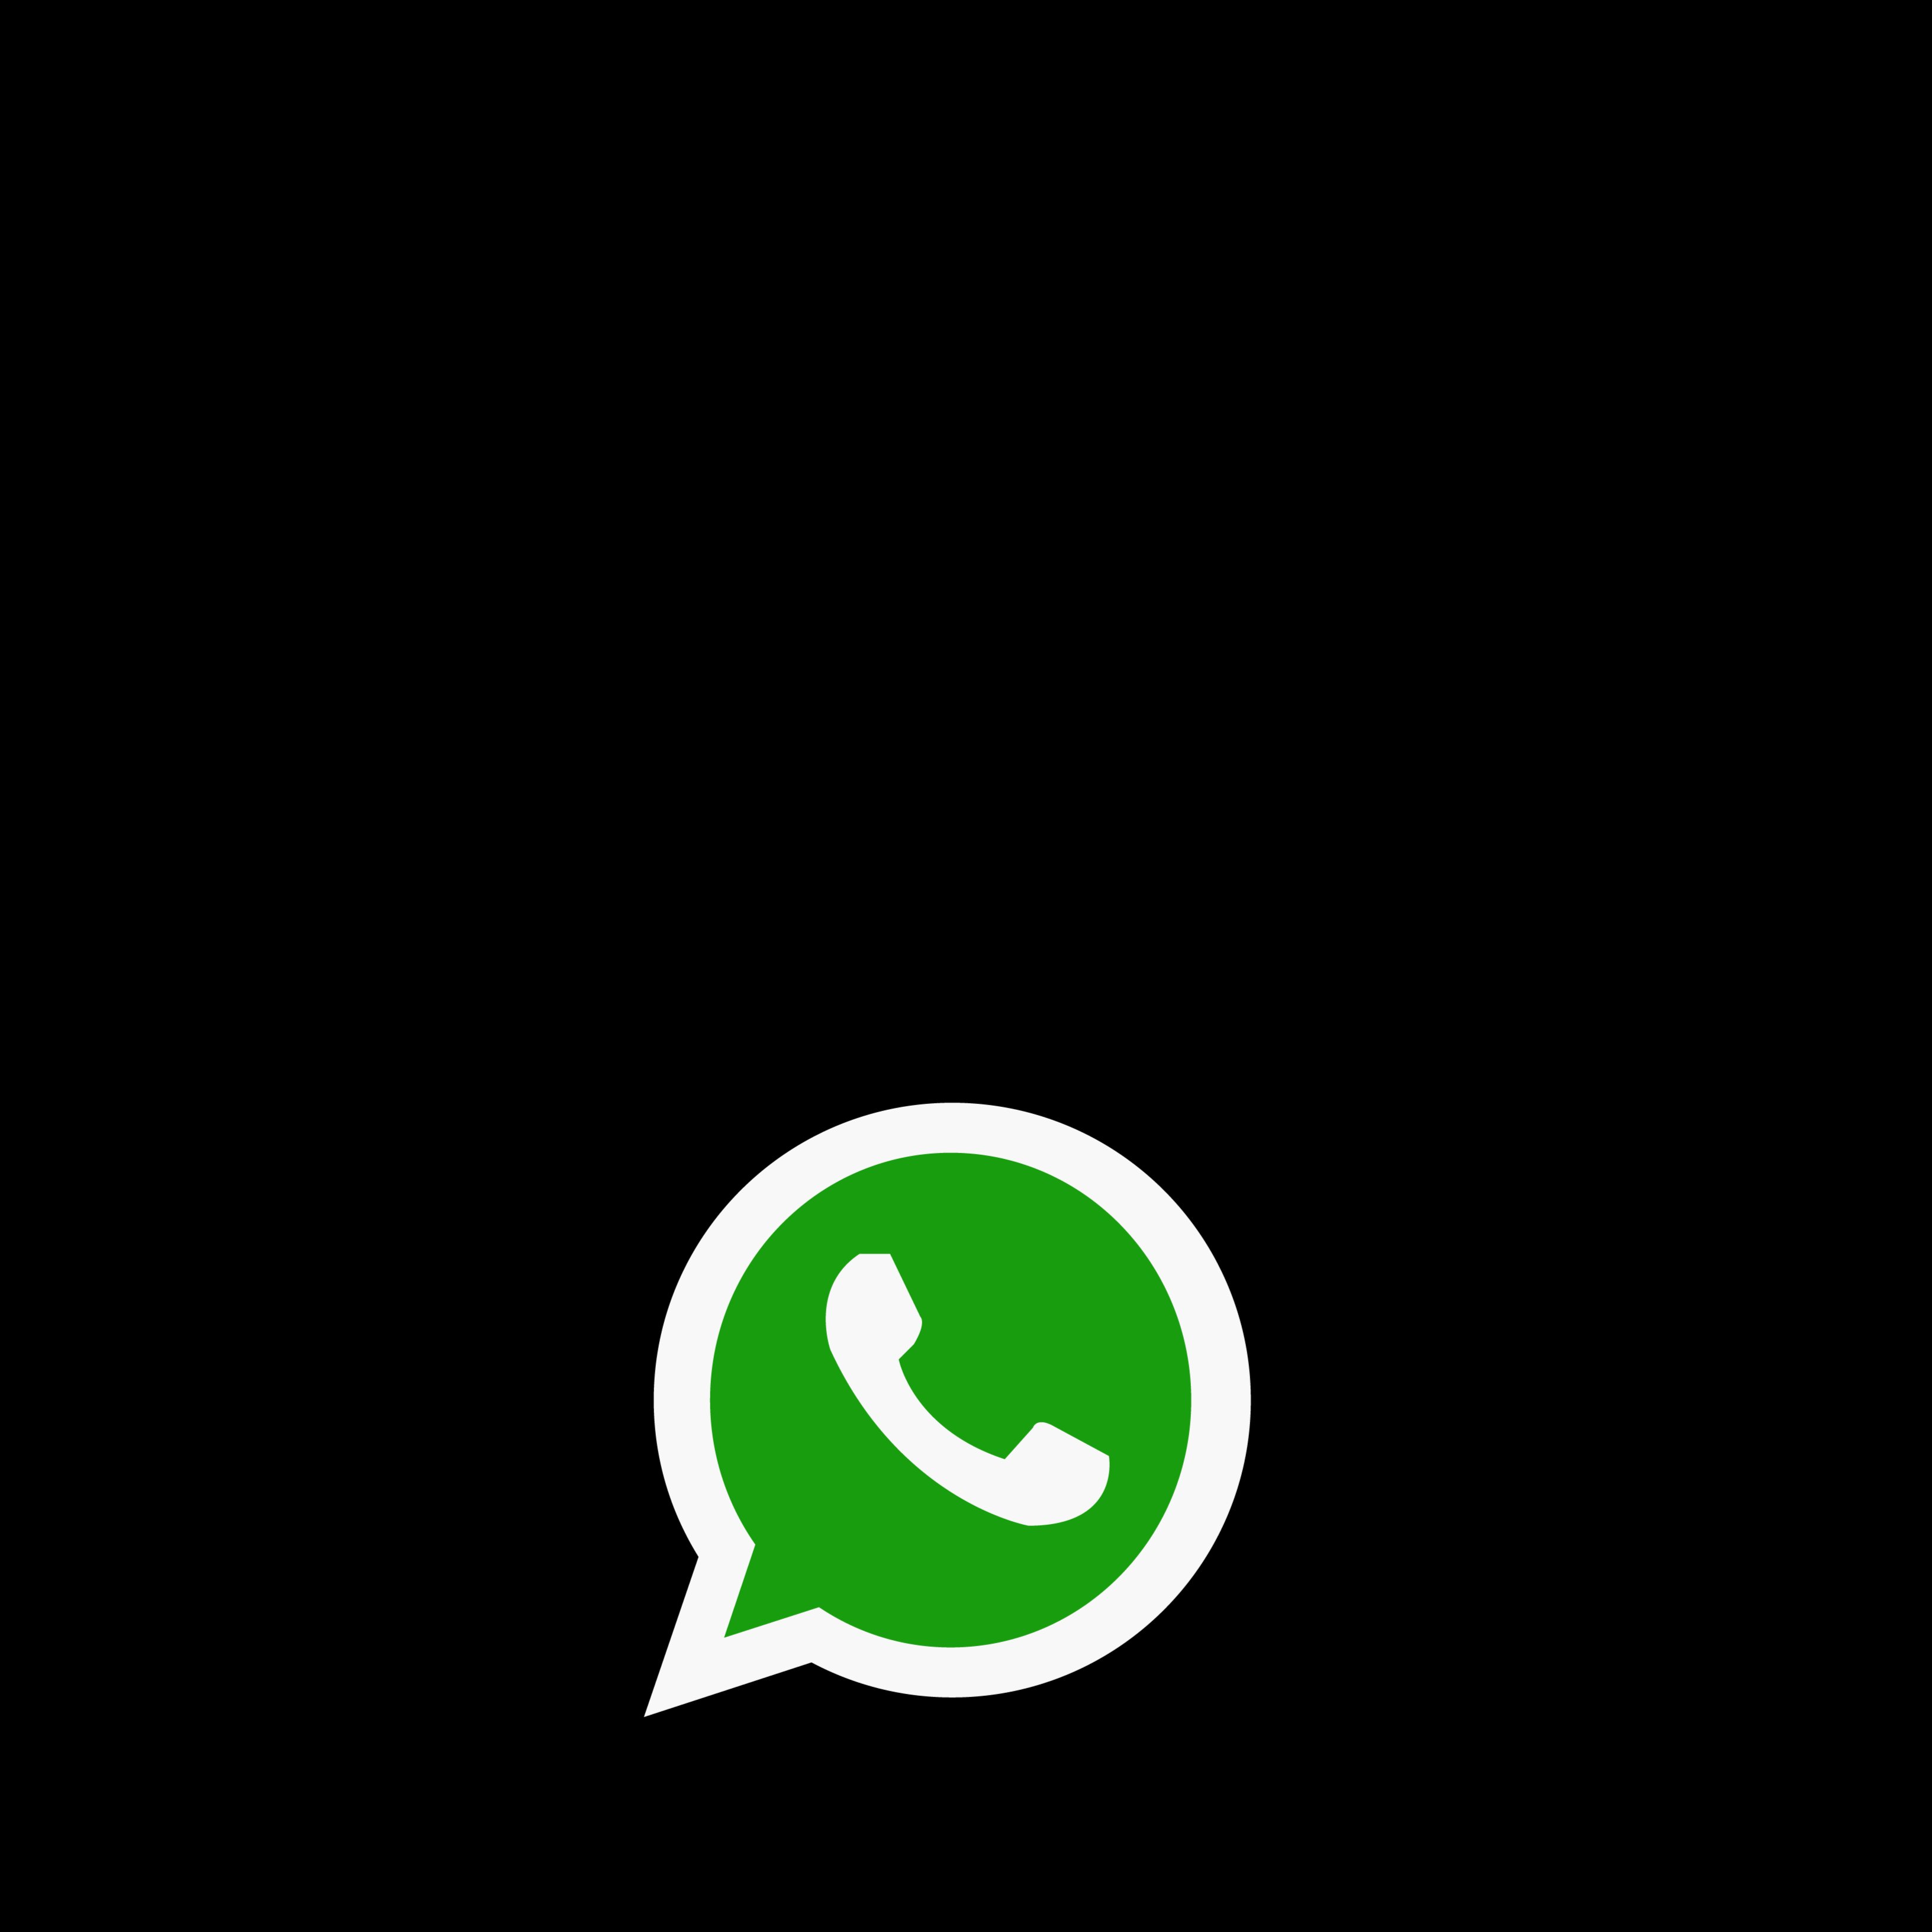 WhatsApp permite proteger chats concretos